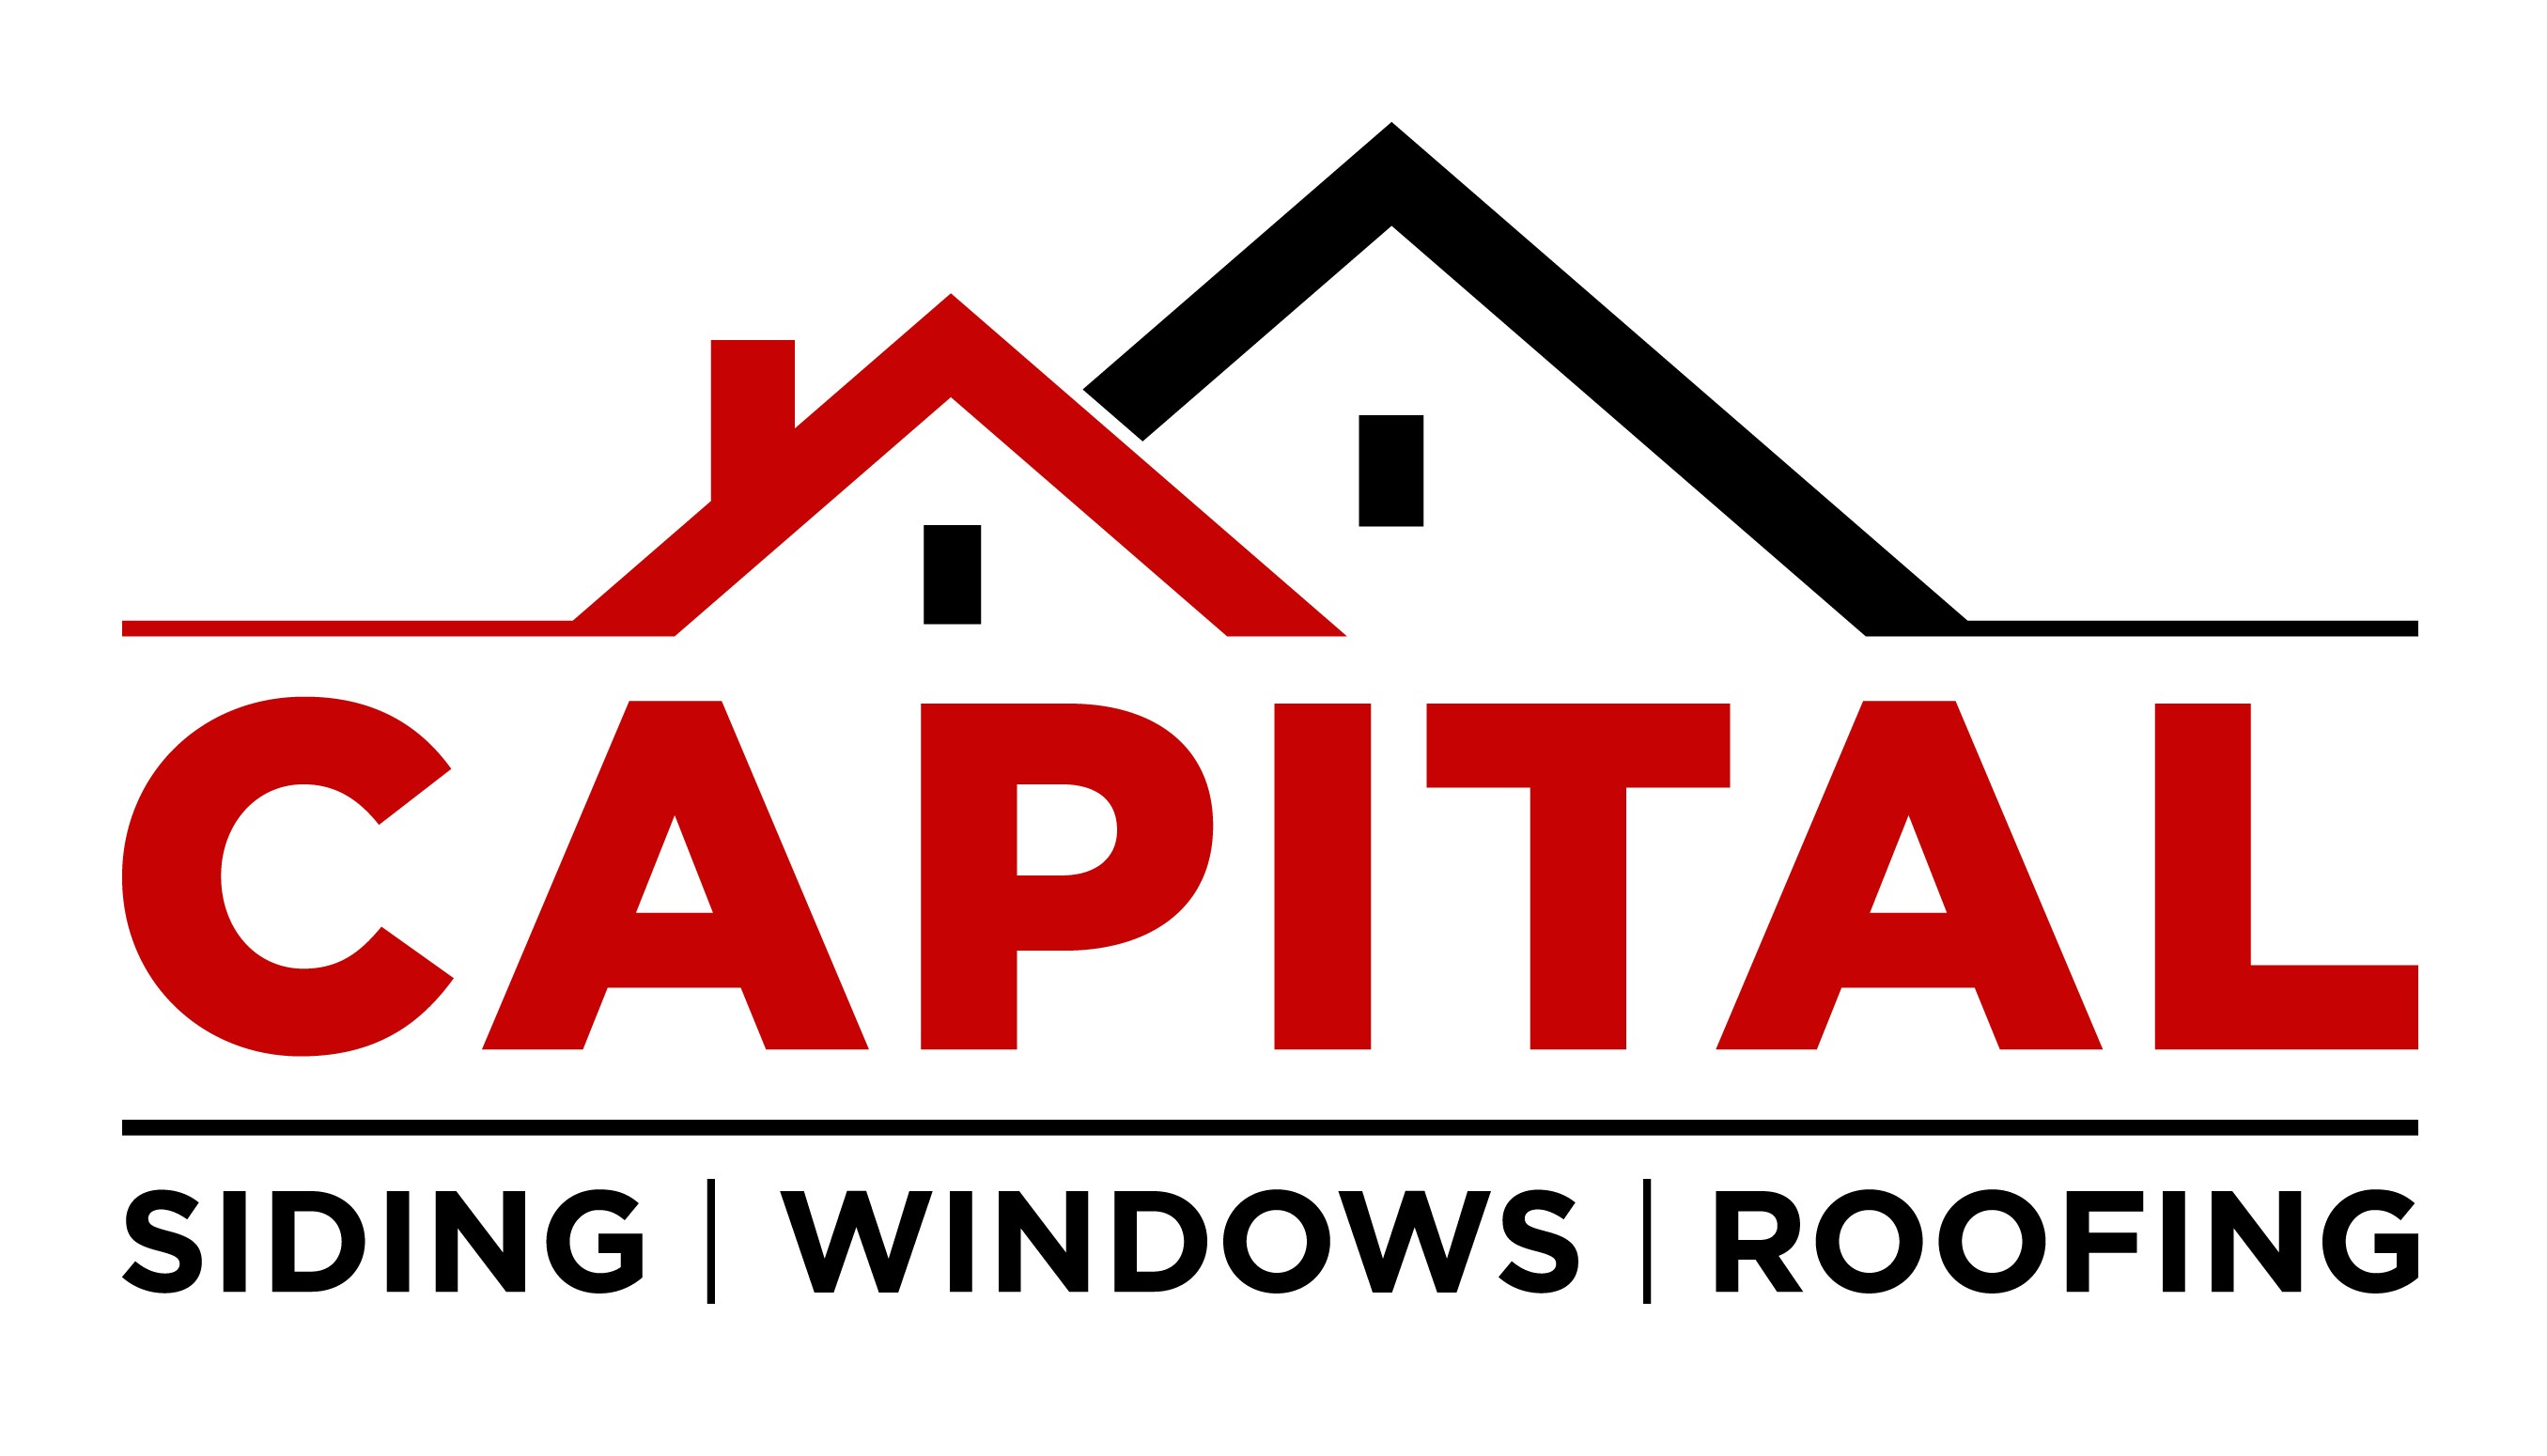 Capital Siding, Windows & Roofing Logo